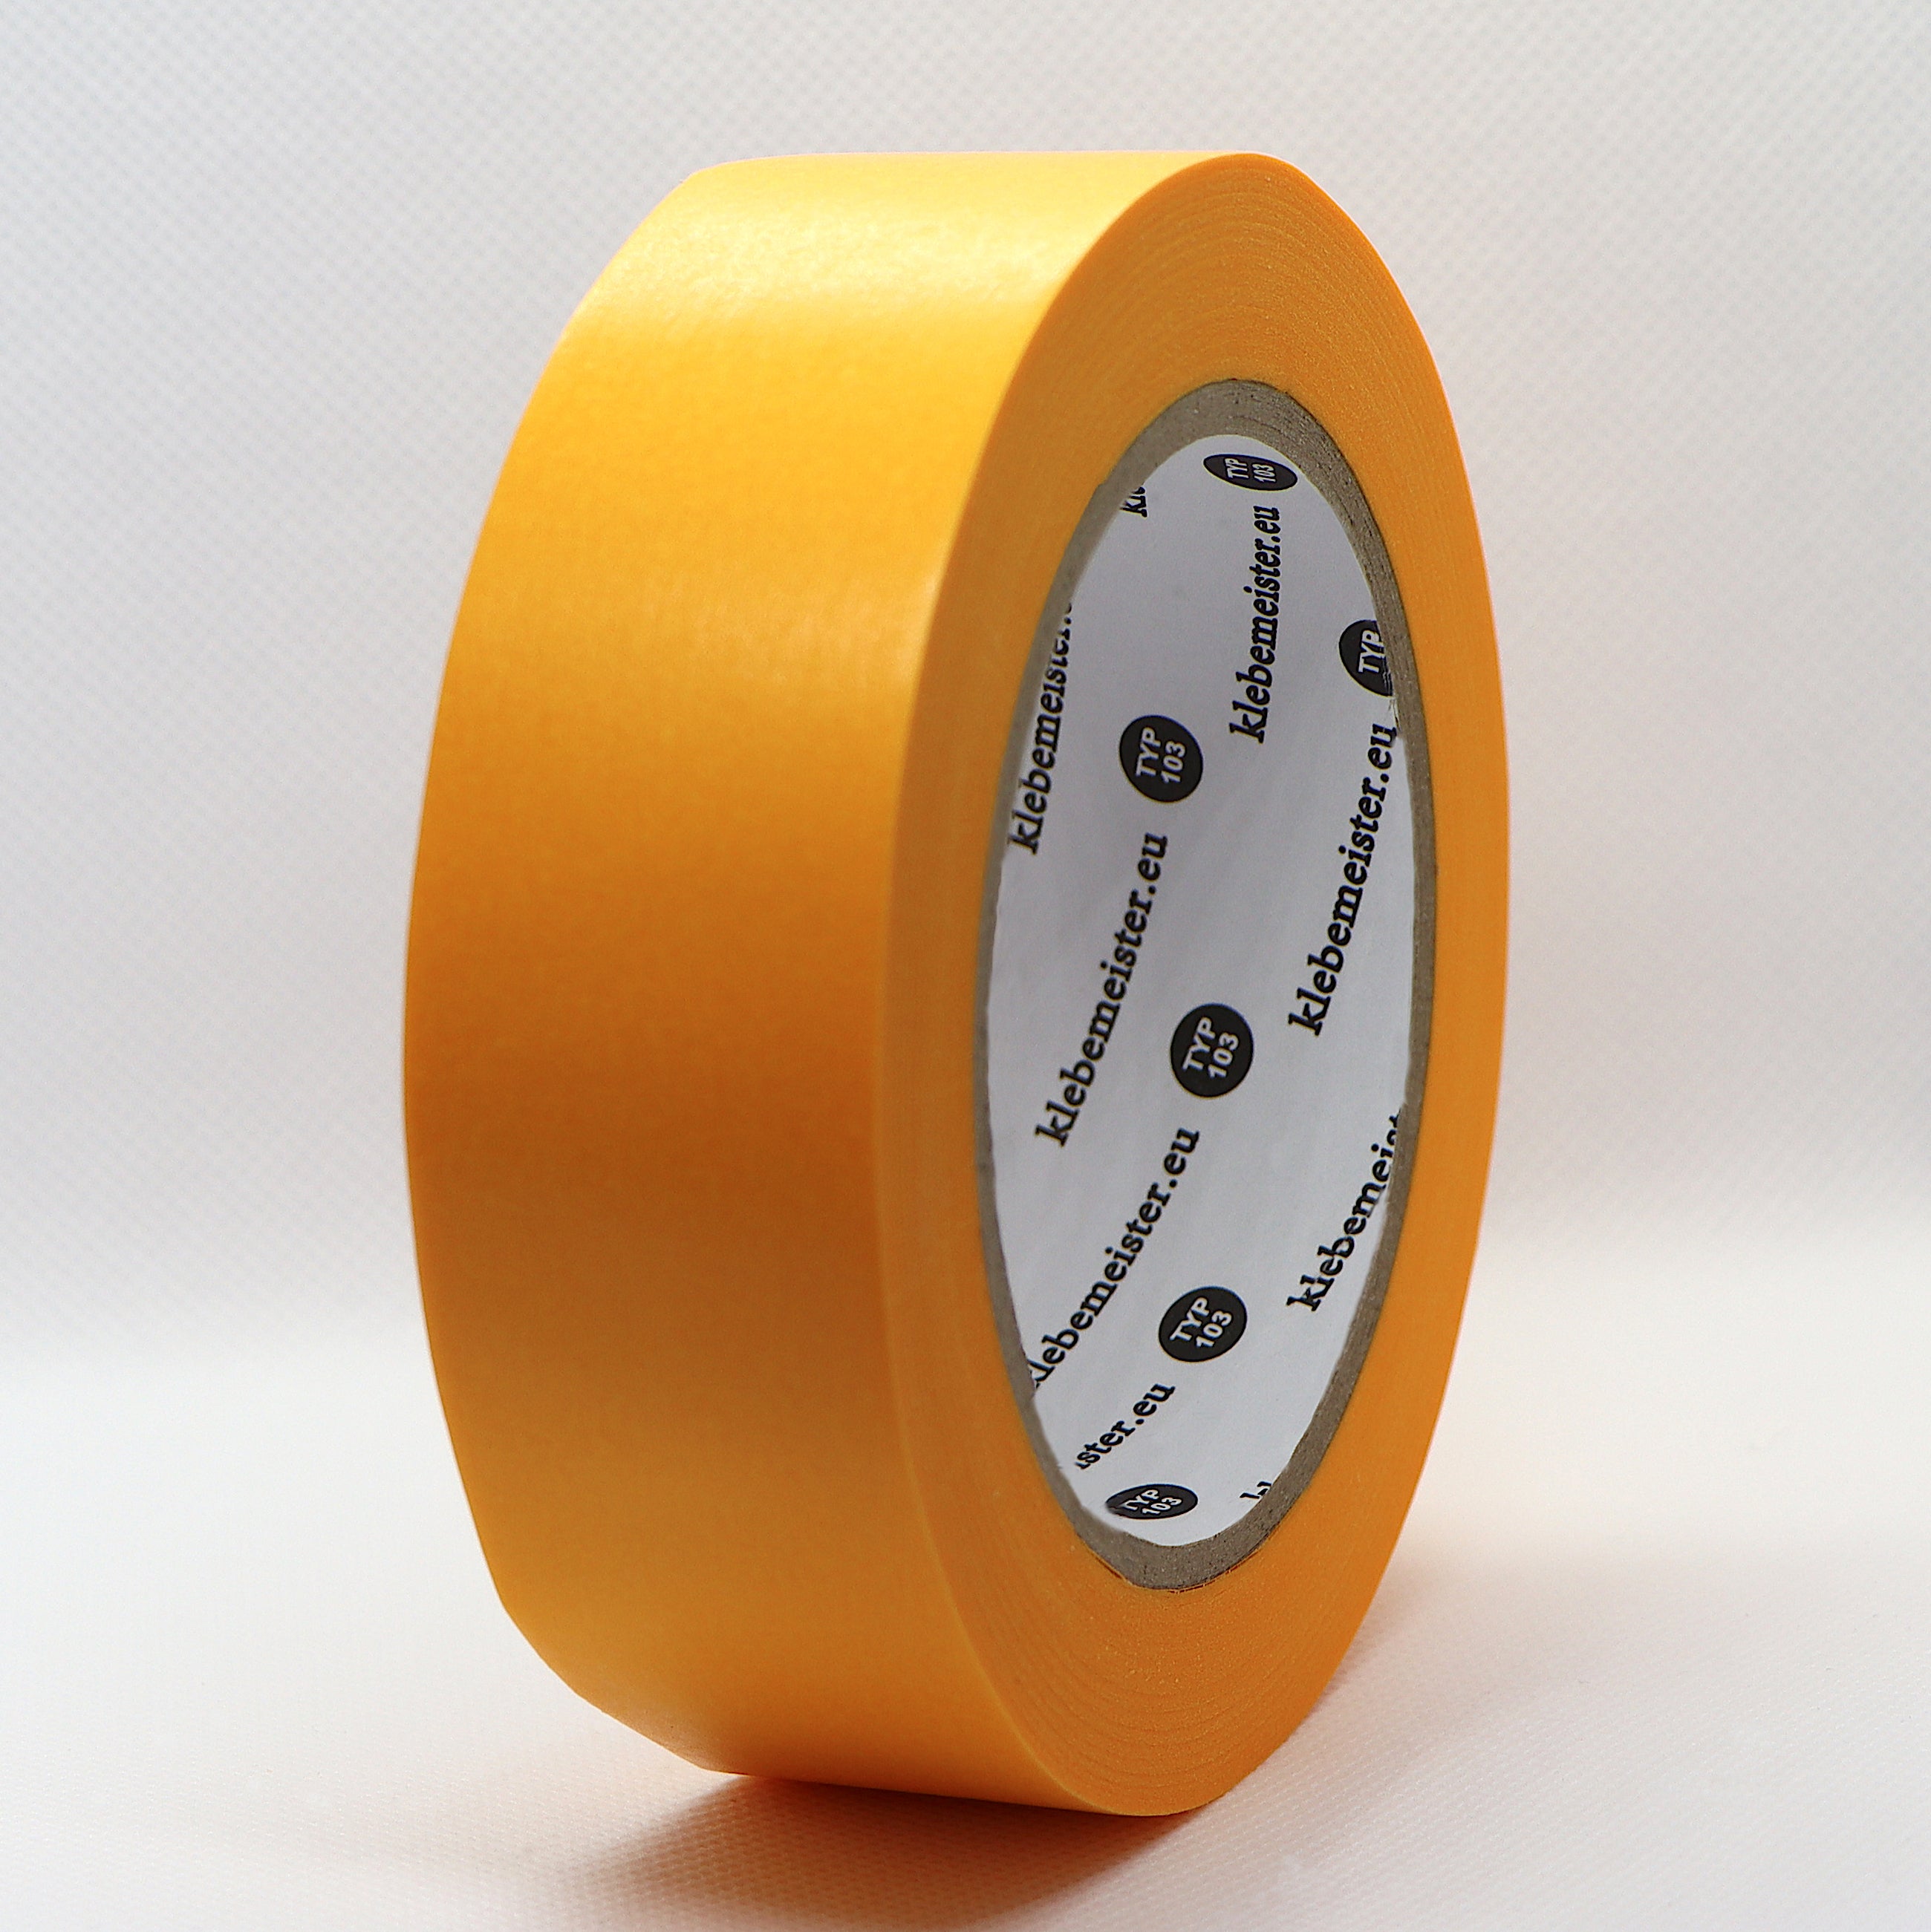 Goldband Tape (Soft), Painter's Masking Tape, 12 Rolls